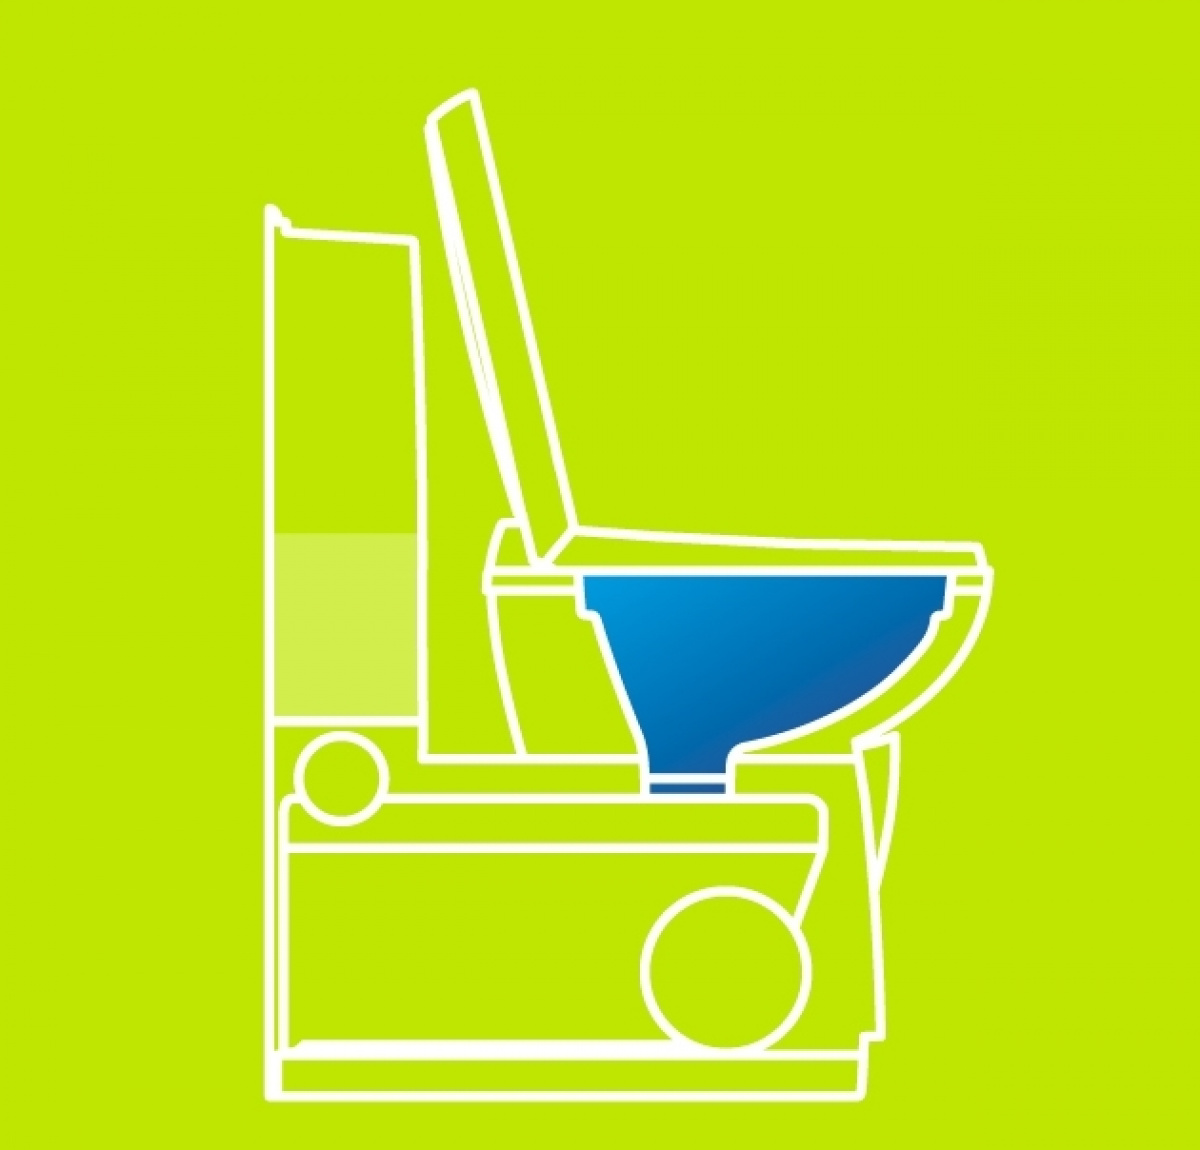 Thetfords rengøringsmiddel til toiletkummen i gruppen Vand & Sanitet / Kem / Kemikalier og tilbehør hos Campmarket (64679)